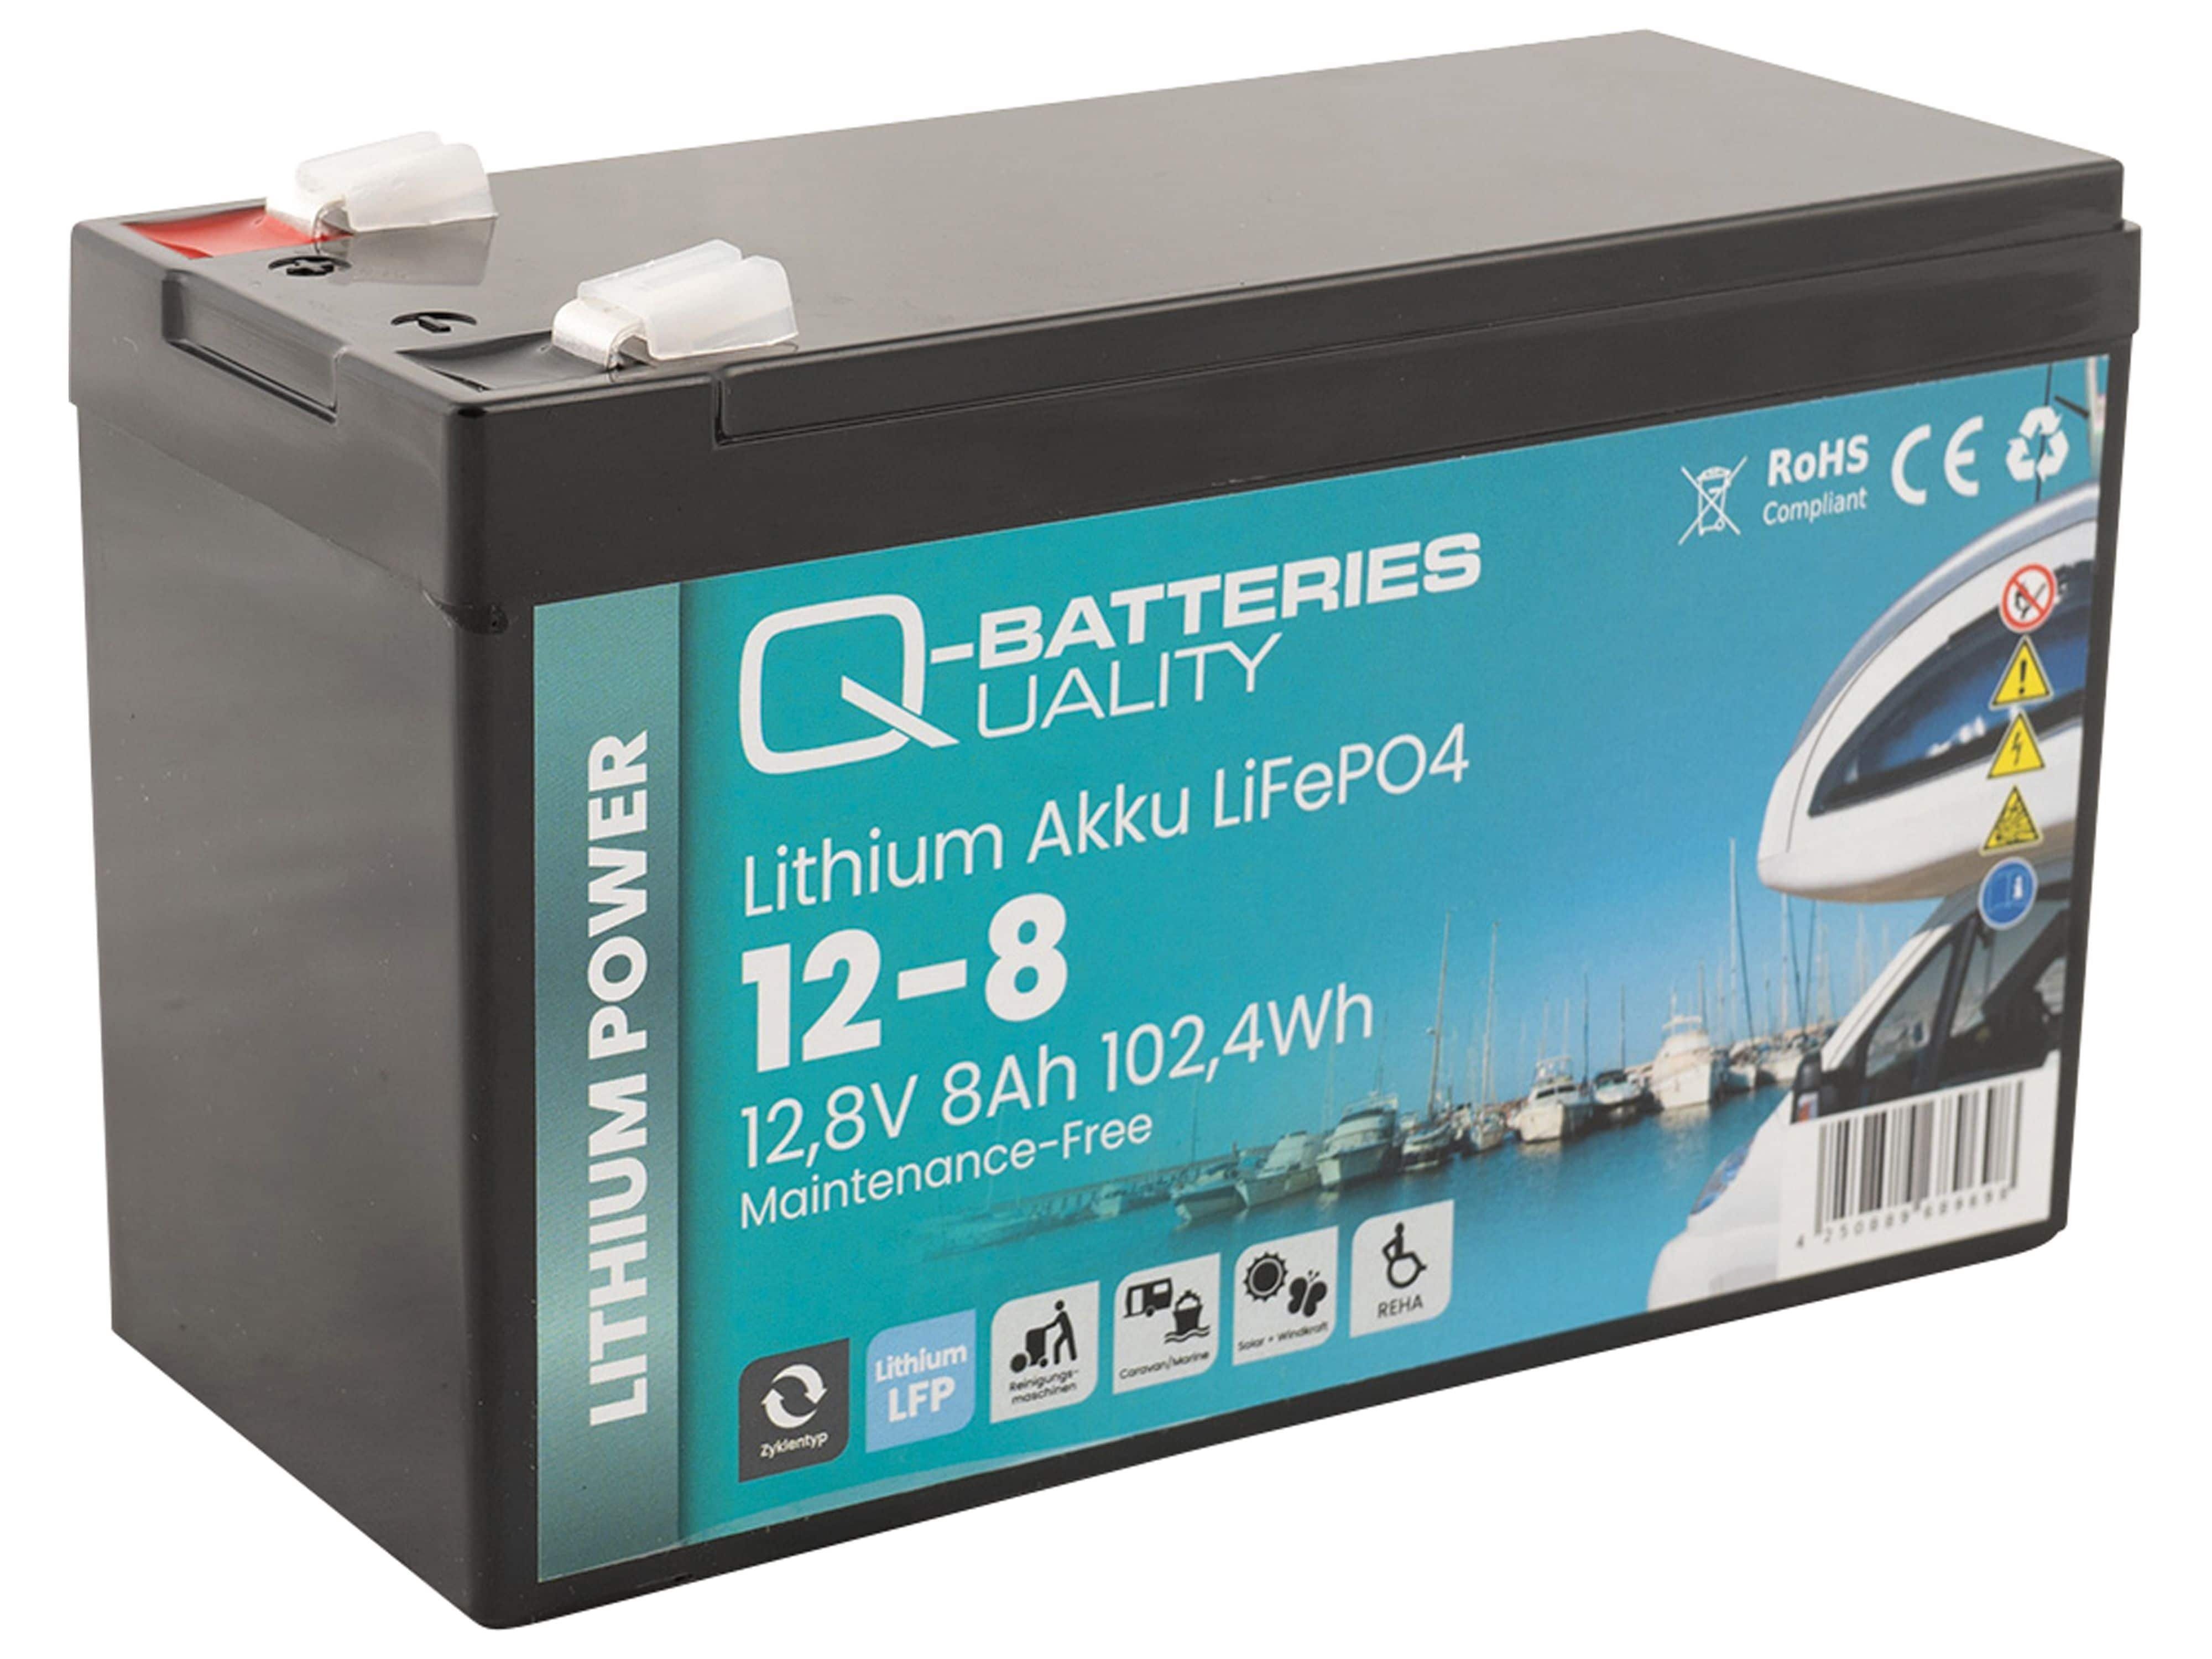 12,8V Q-BATTERIES 8Ah, Akku Batterie 102,4Wh 12-8 Q-Batteries Lithium